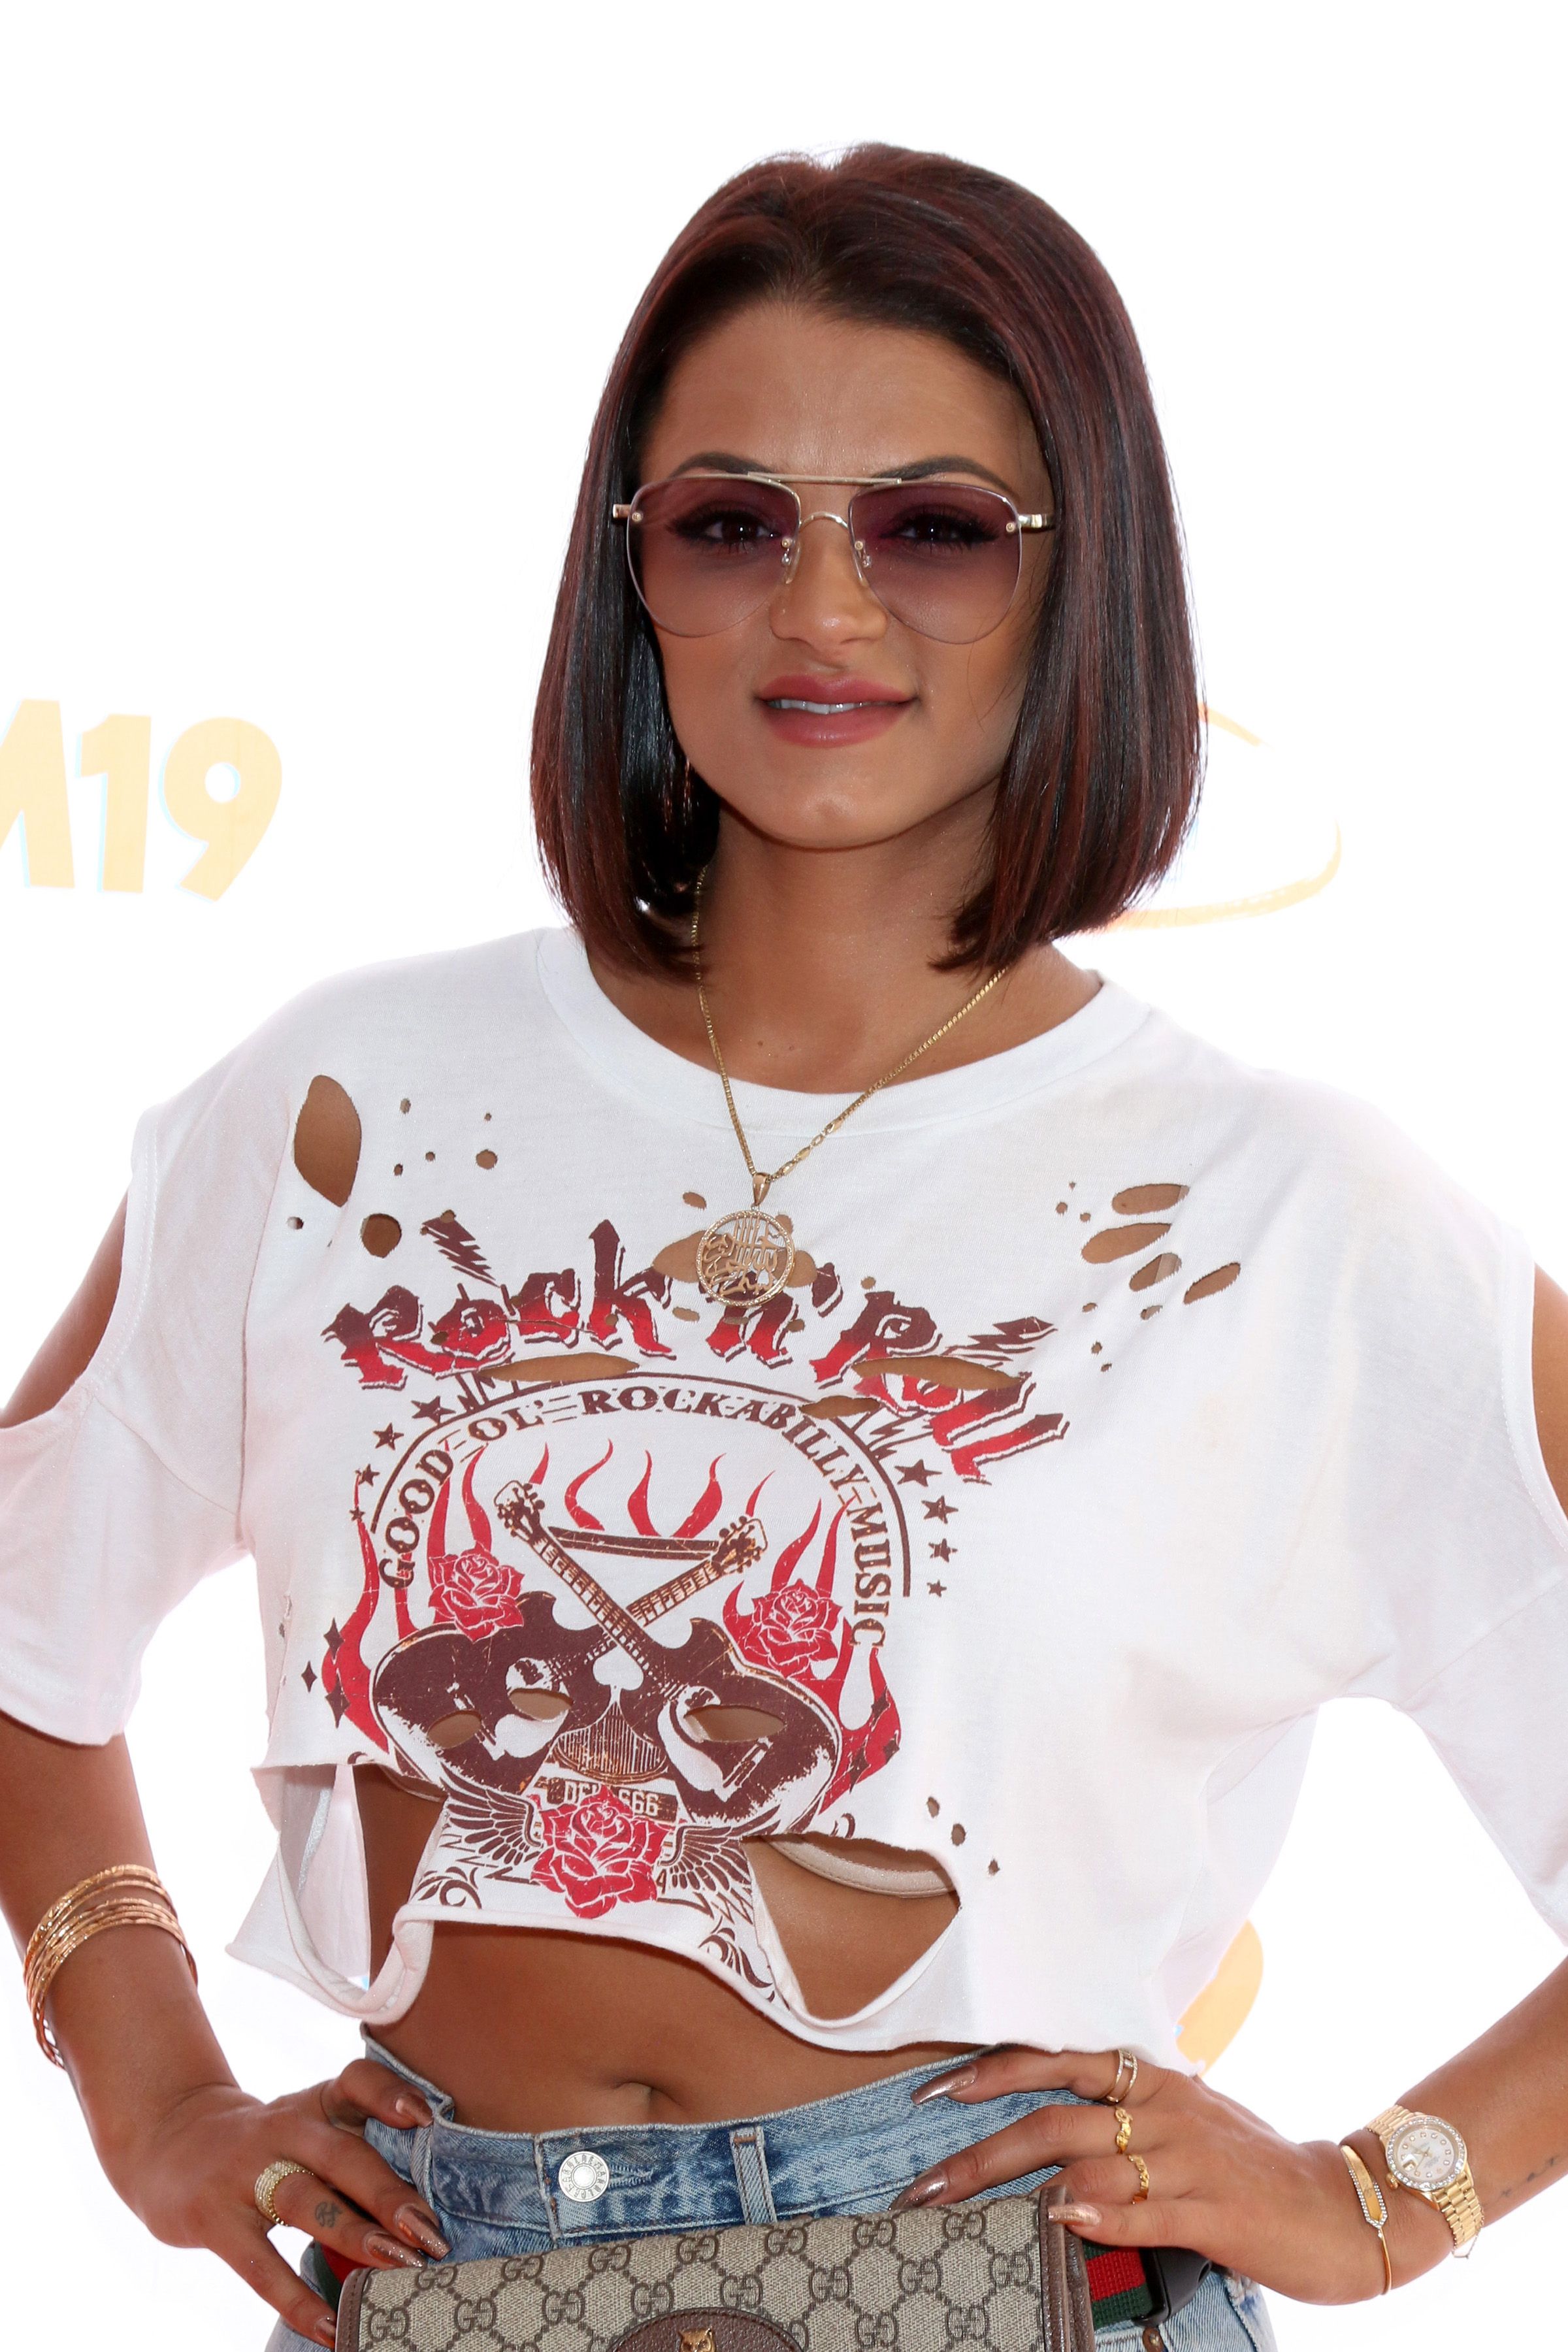 Golnesa "GG" Gharachedaghi wears a Rock n Roll graphic T-shirt.